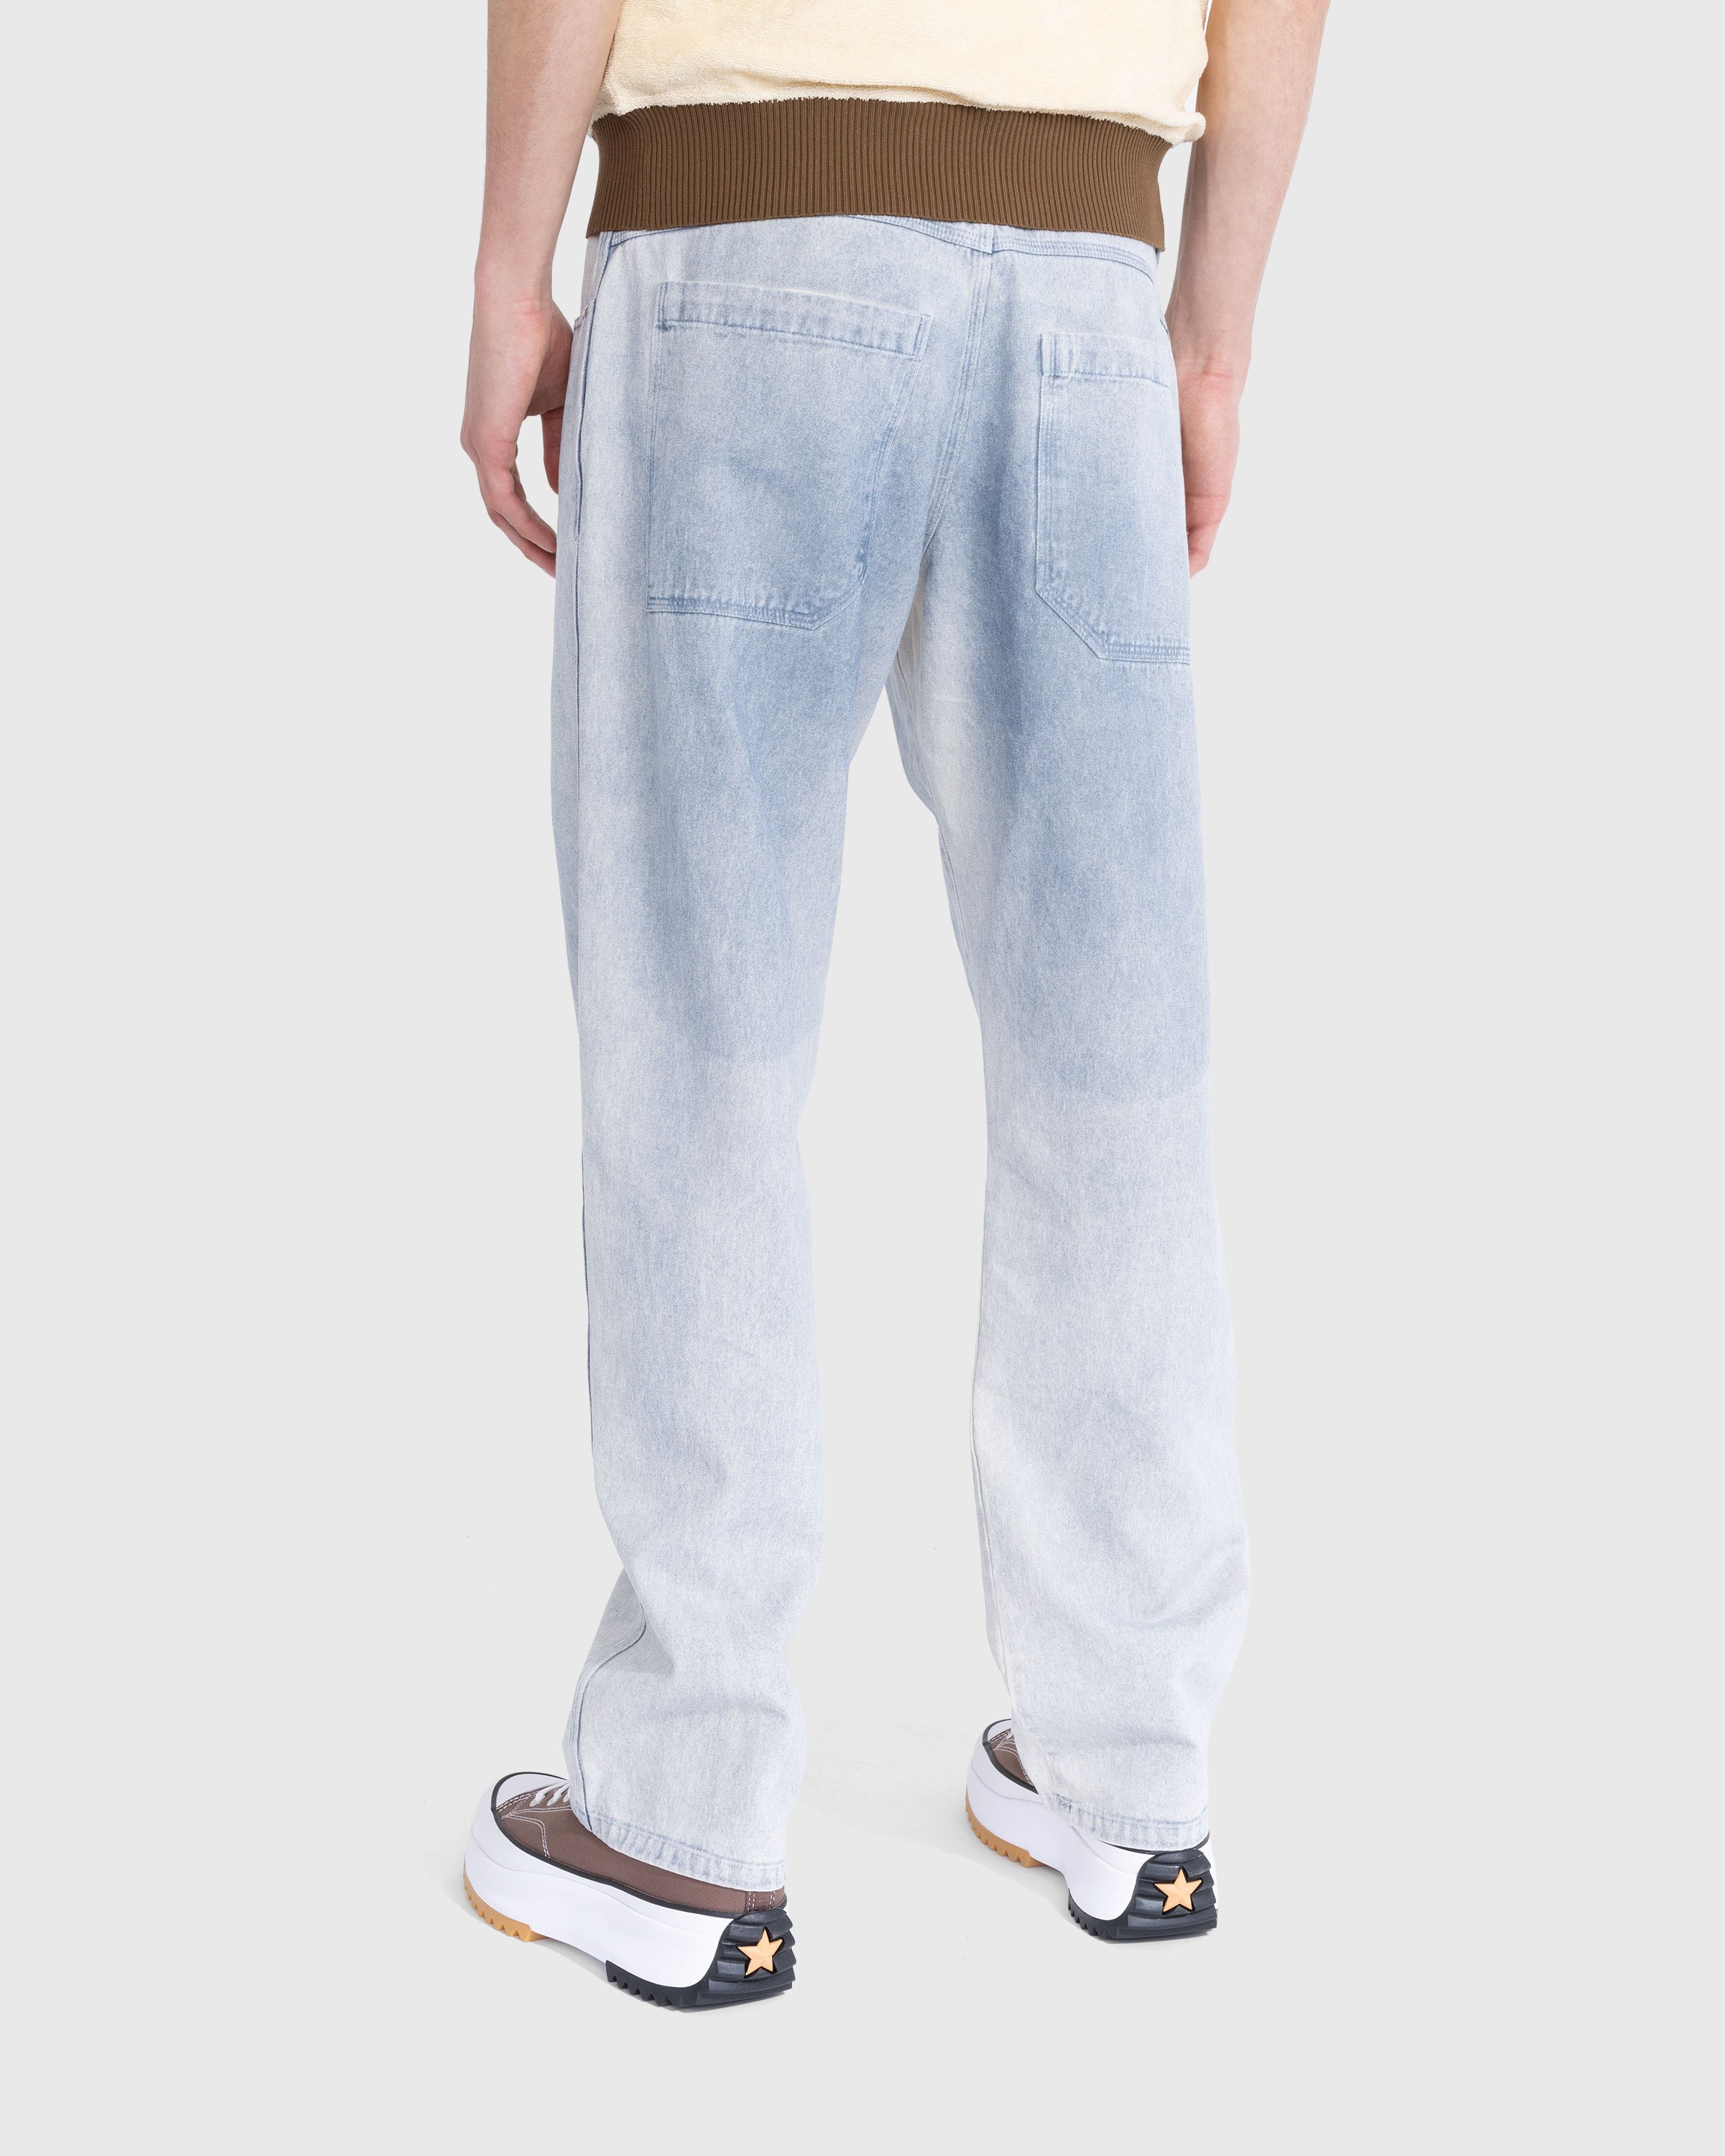 RANRA – Mokollur Jeans Washed Indigo | Highsnobiety Shop